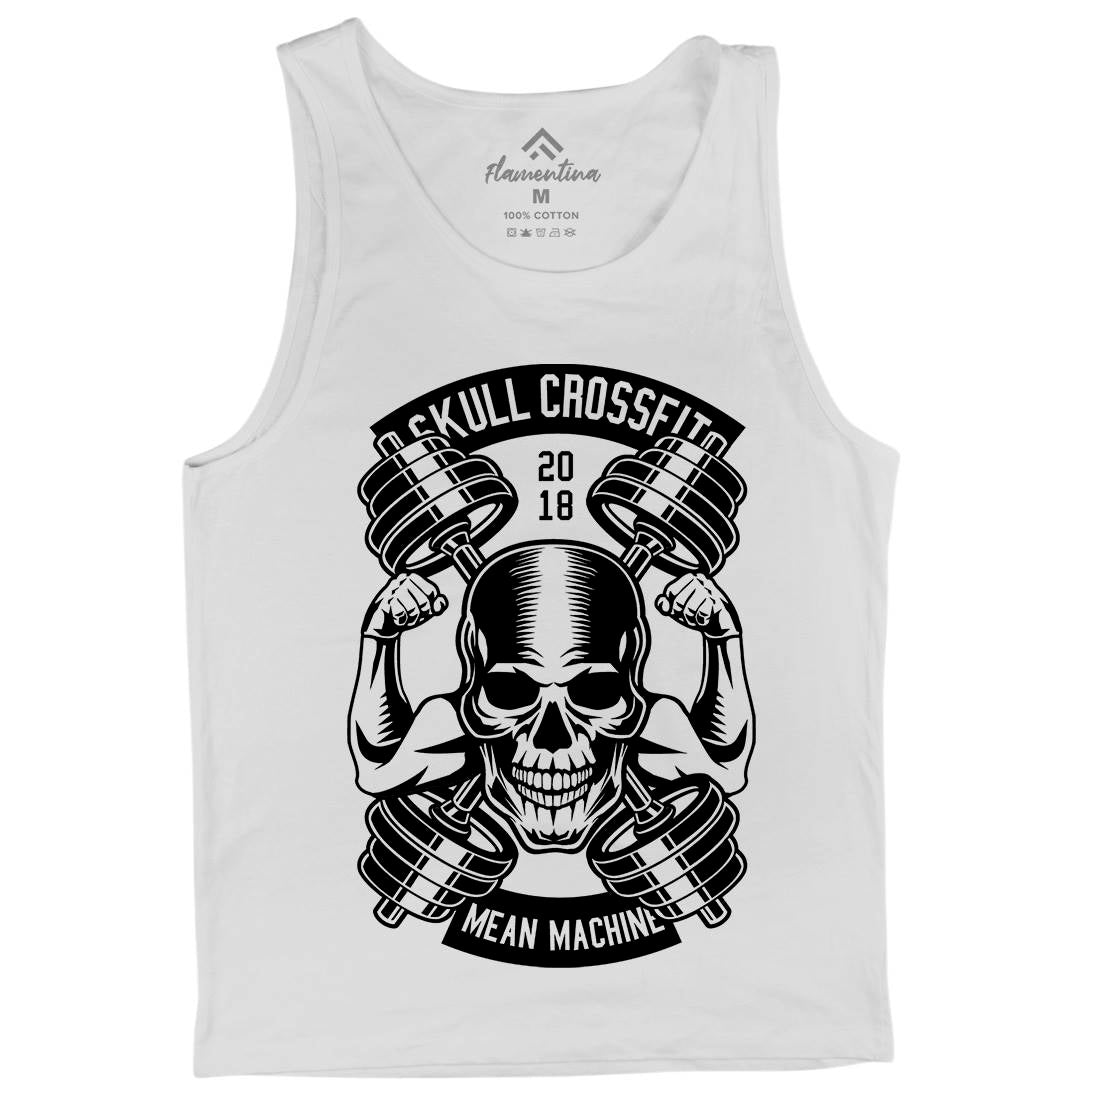 Skull Cross Fit Mens Tank Top Vest Gym B627